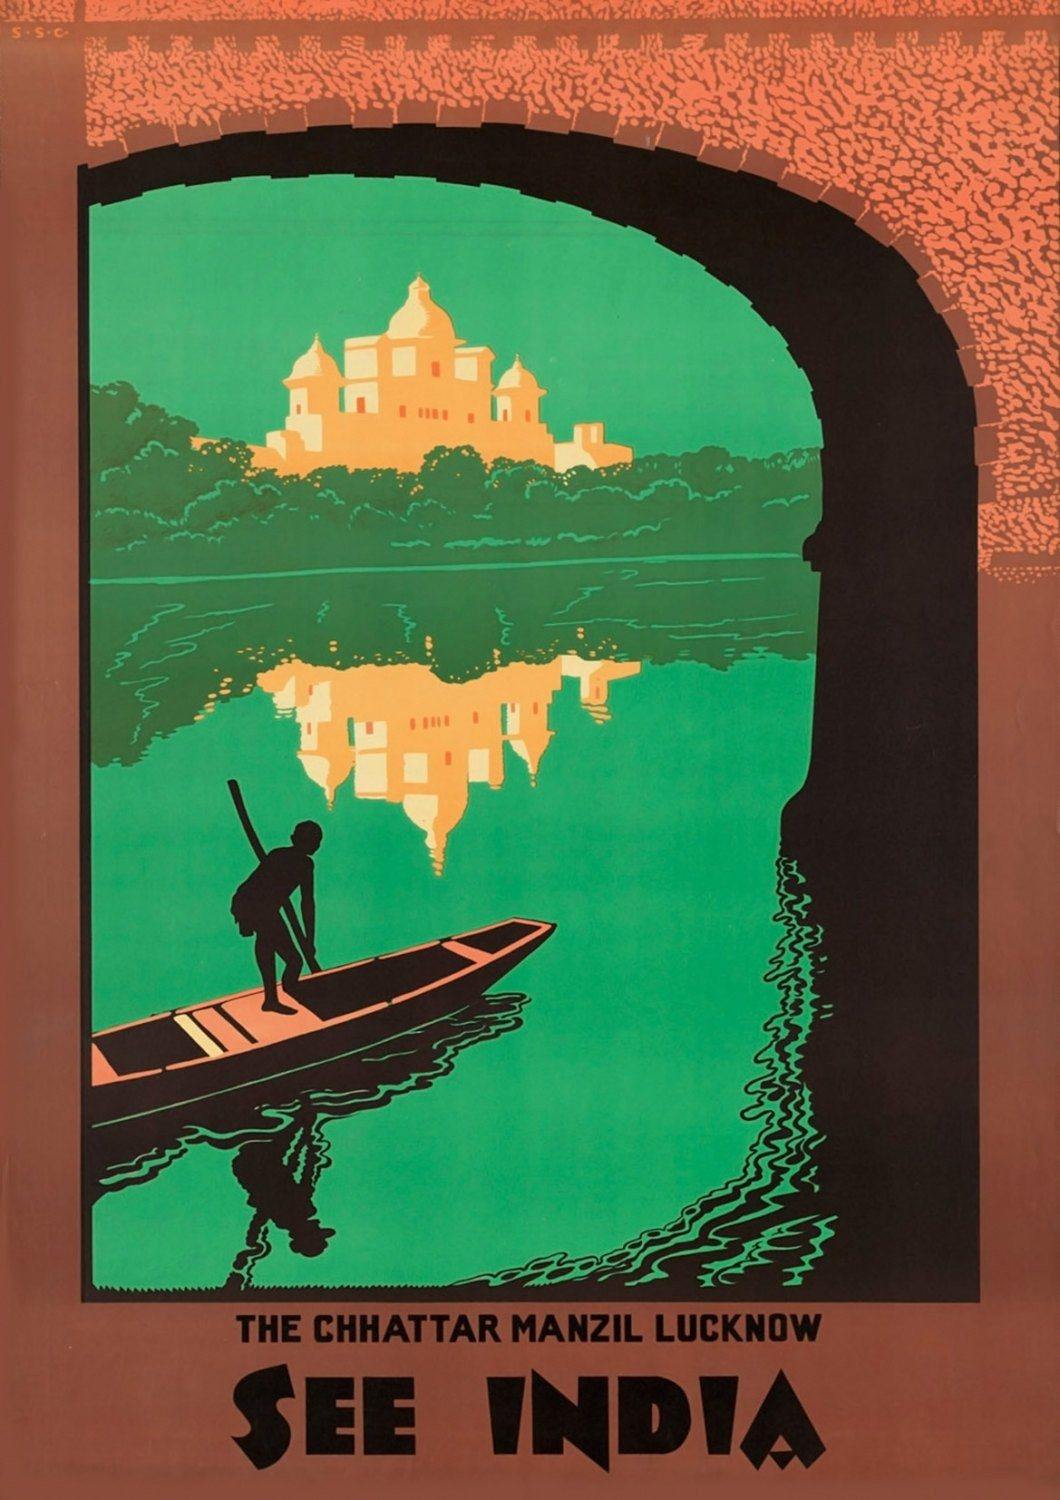 CHHATTAR INDIA POSTER: Vintage Travel Advert Print - Pimlico Prints